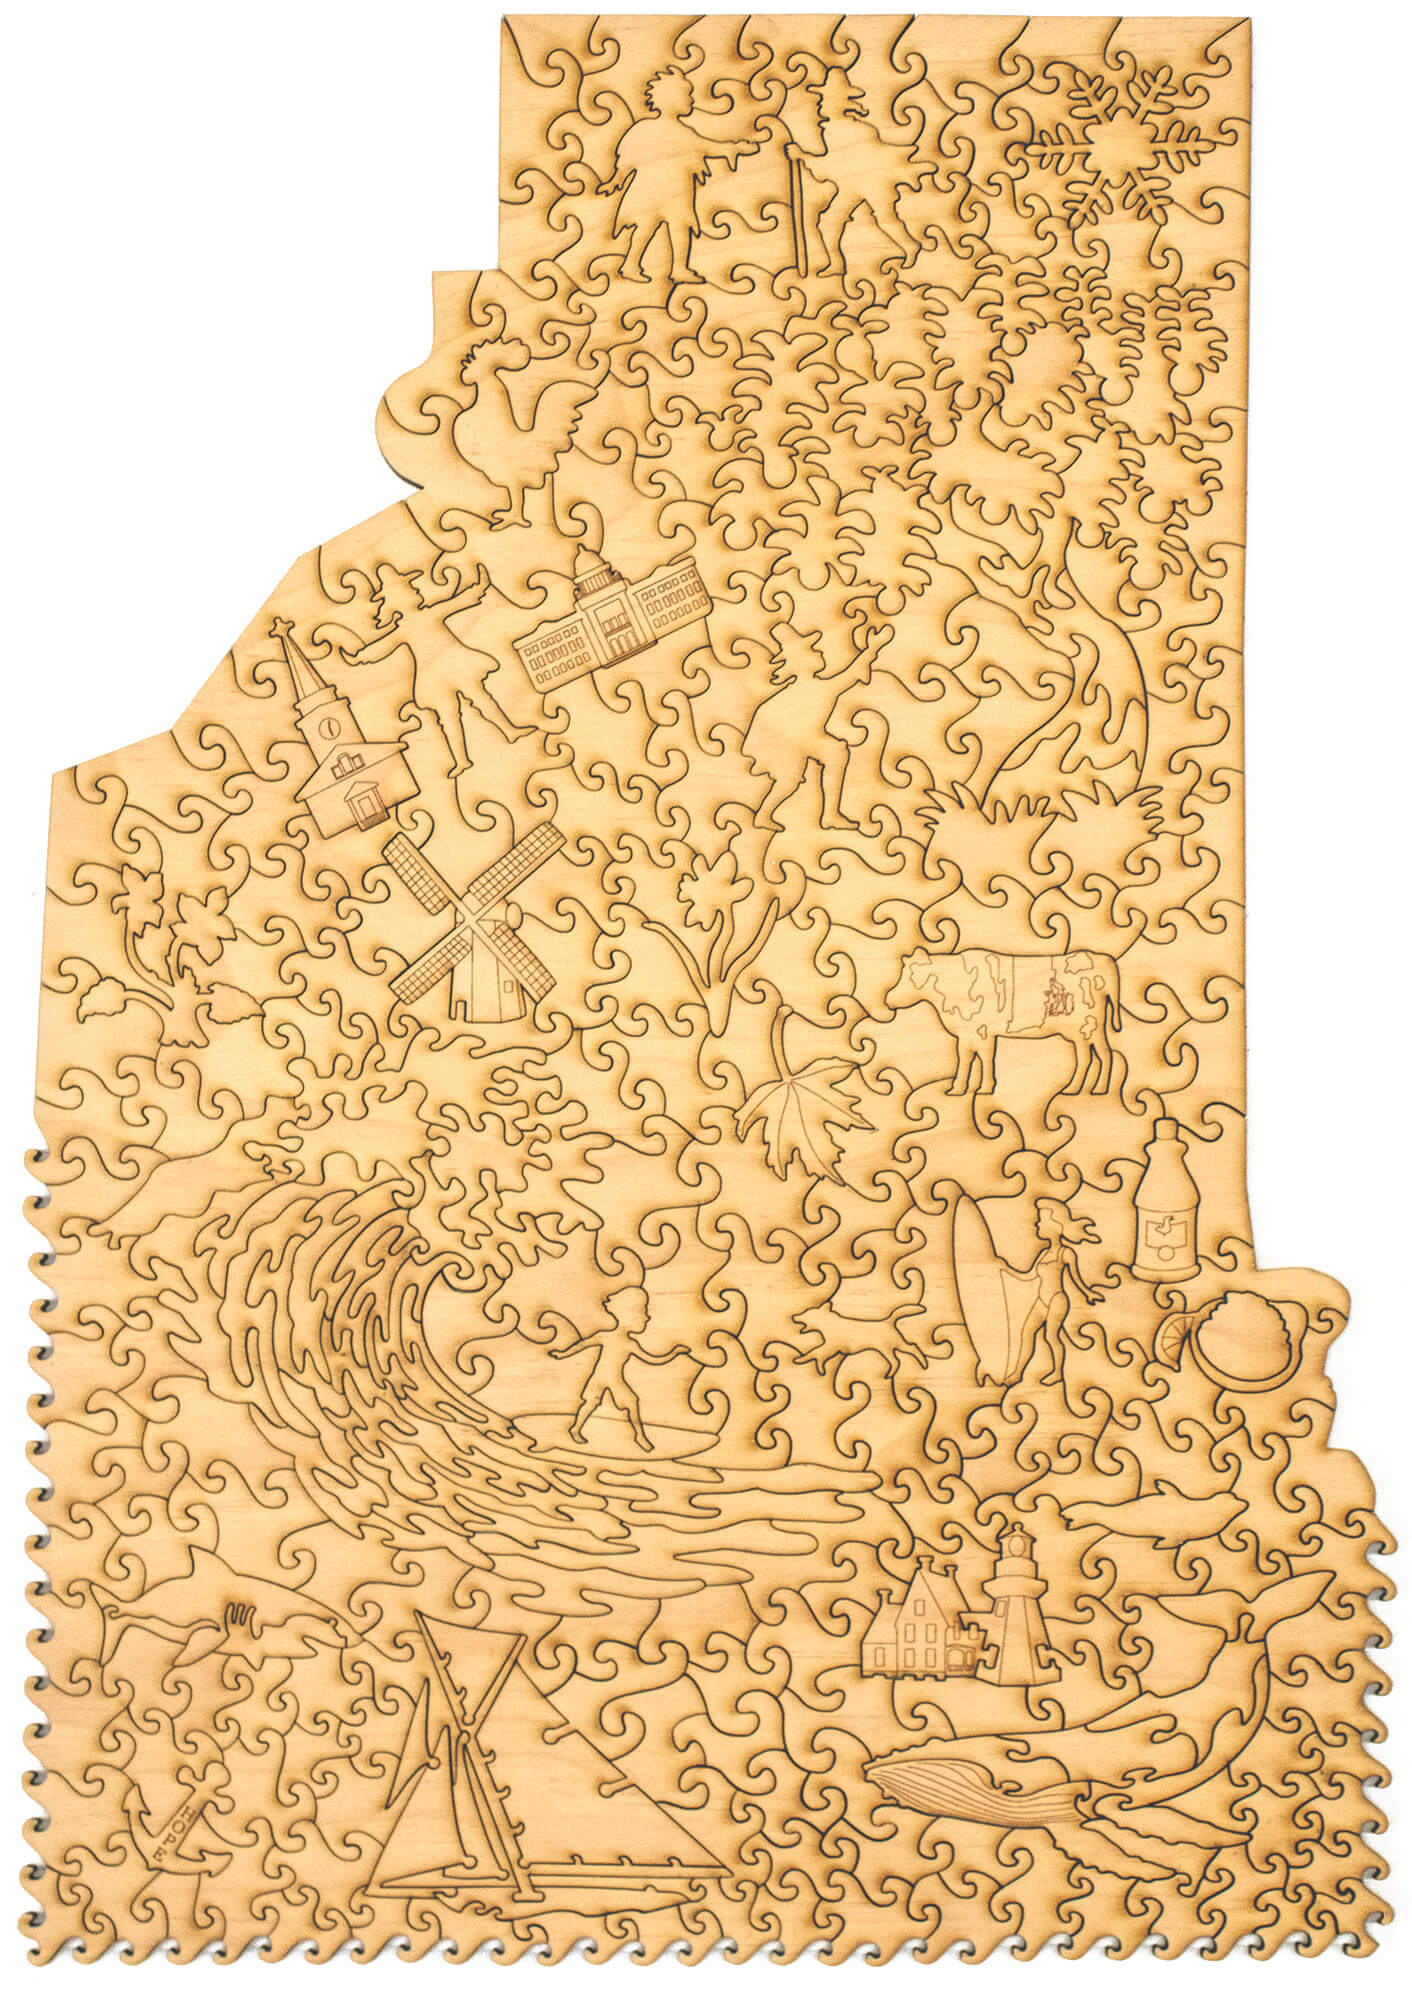 Rhode Island Map - Large